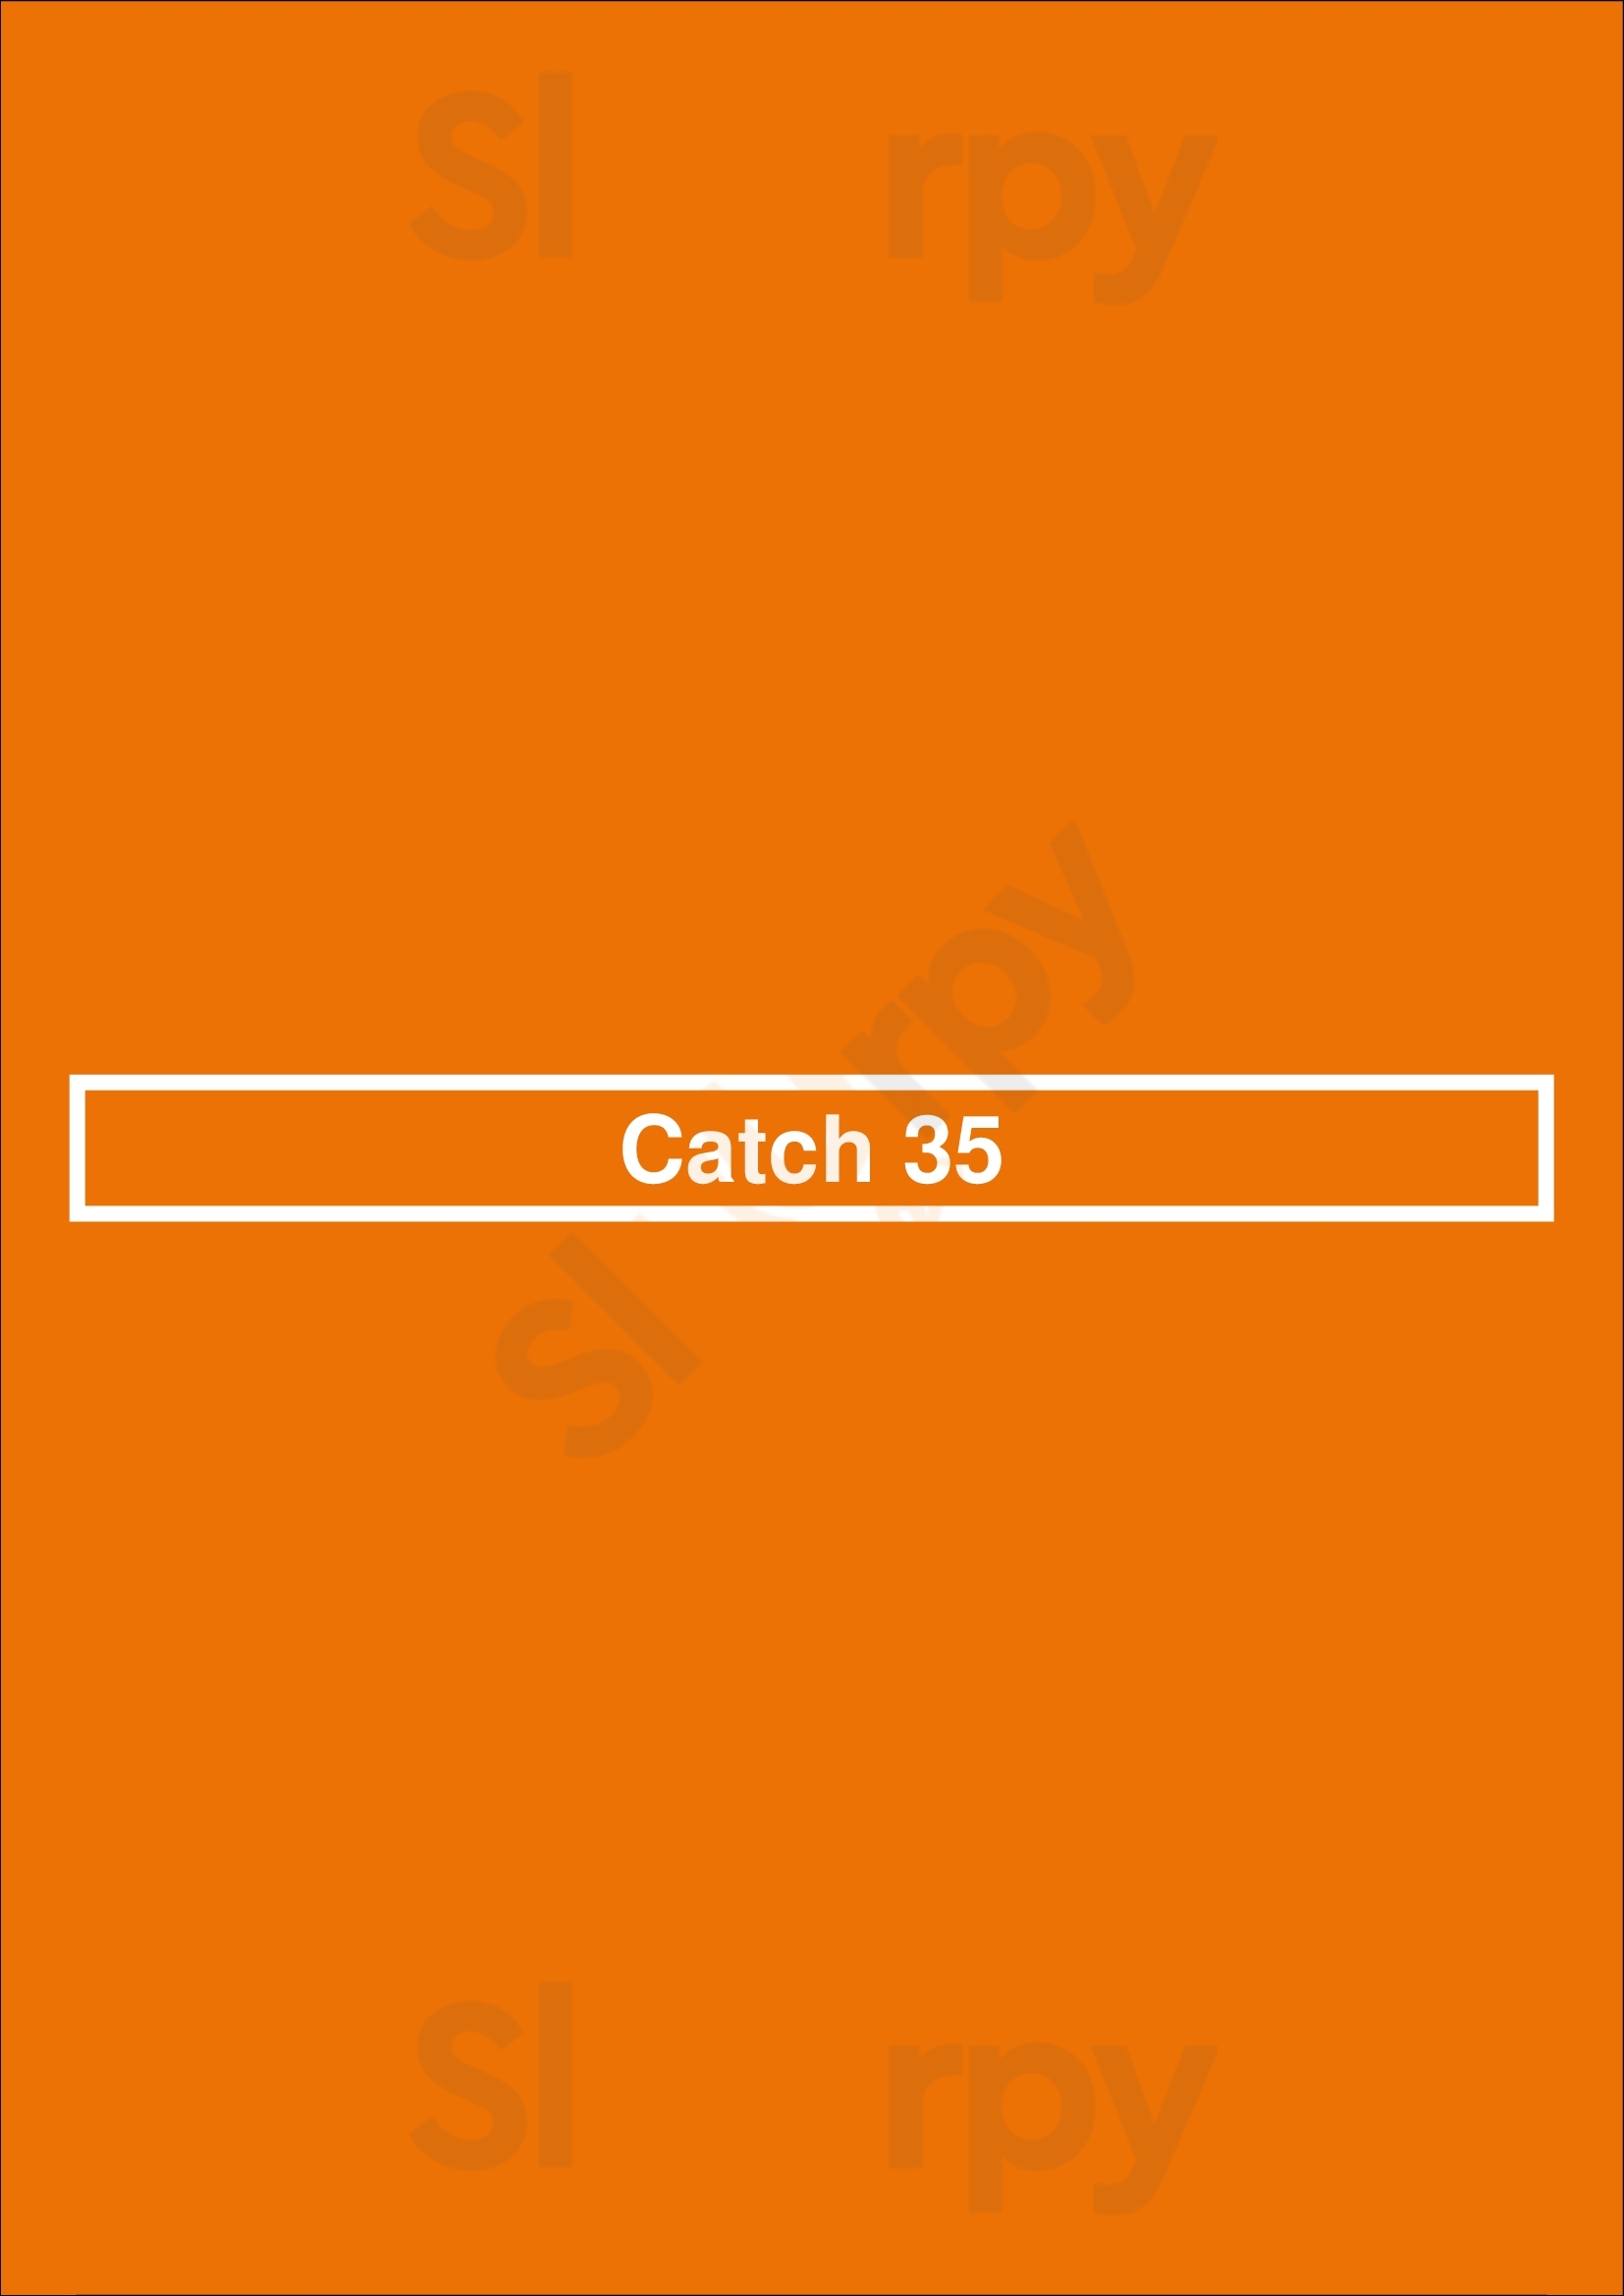 Catch 35 Chicago Menu - 1